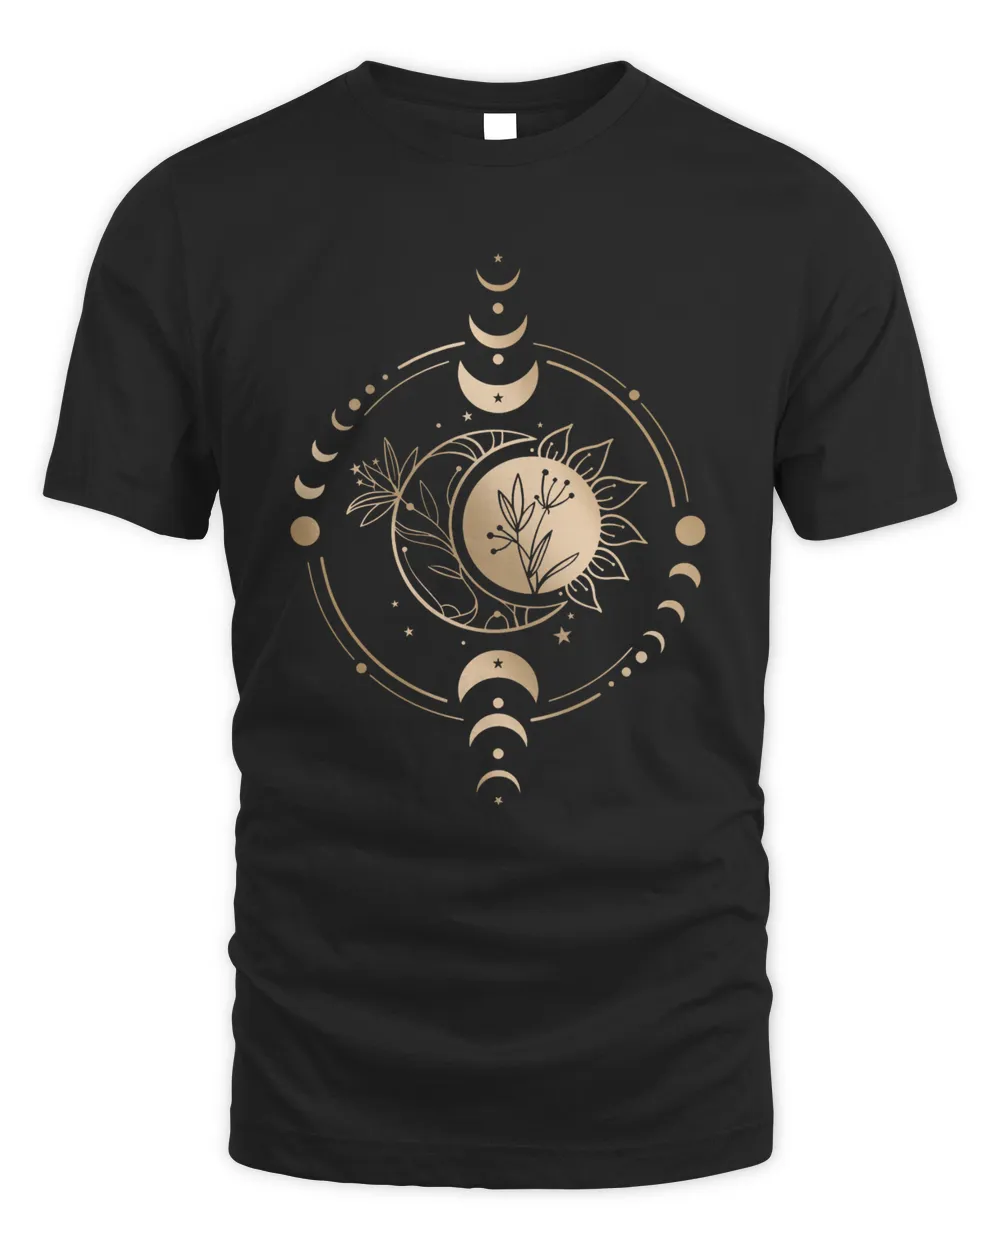 Mystic Moon And Sun Shirt, Mystical Moon Phase Shirt, Moon Phase T-Shirt, Boho Vintage Moon Shirt, Celestial Moon Shirt, Spiritual Shirt